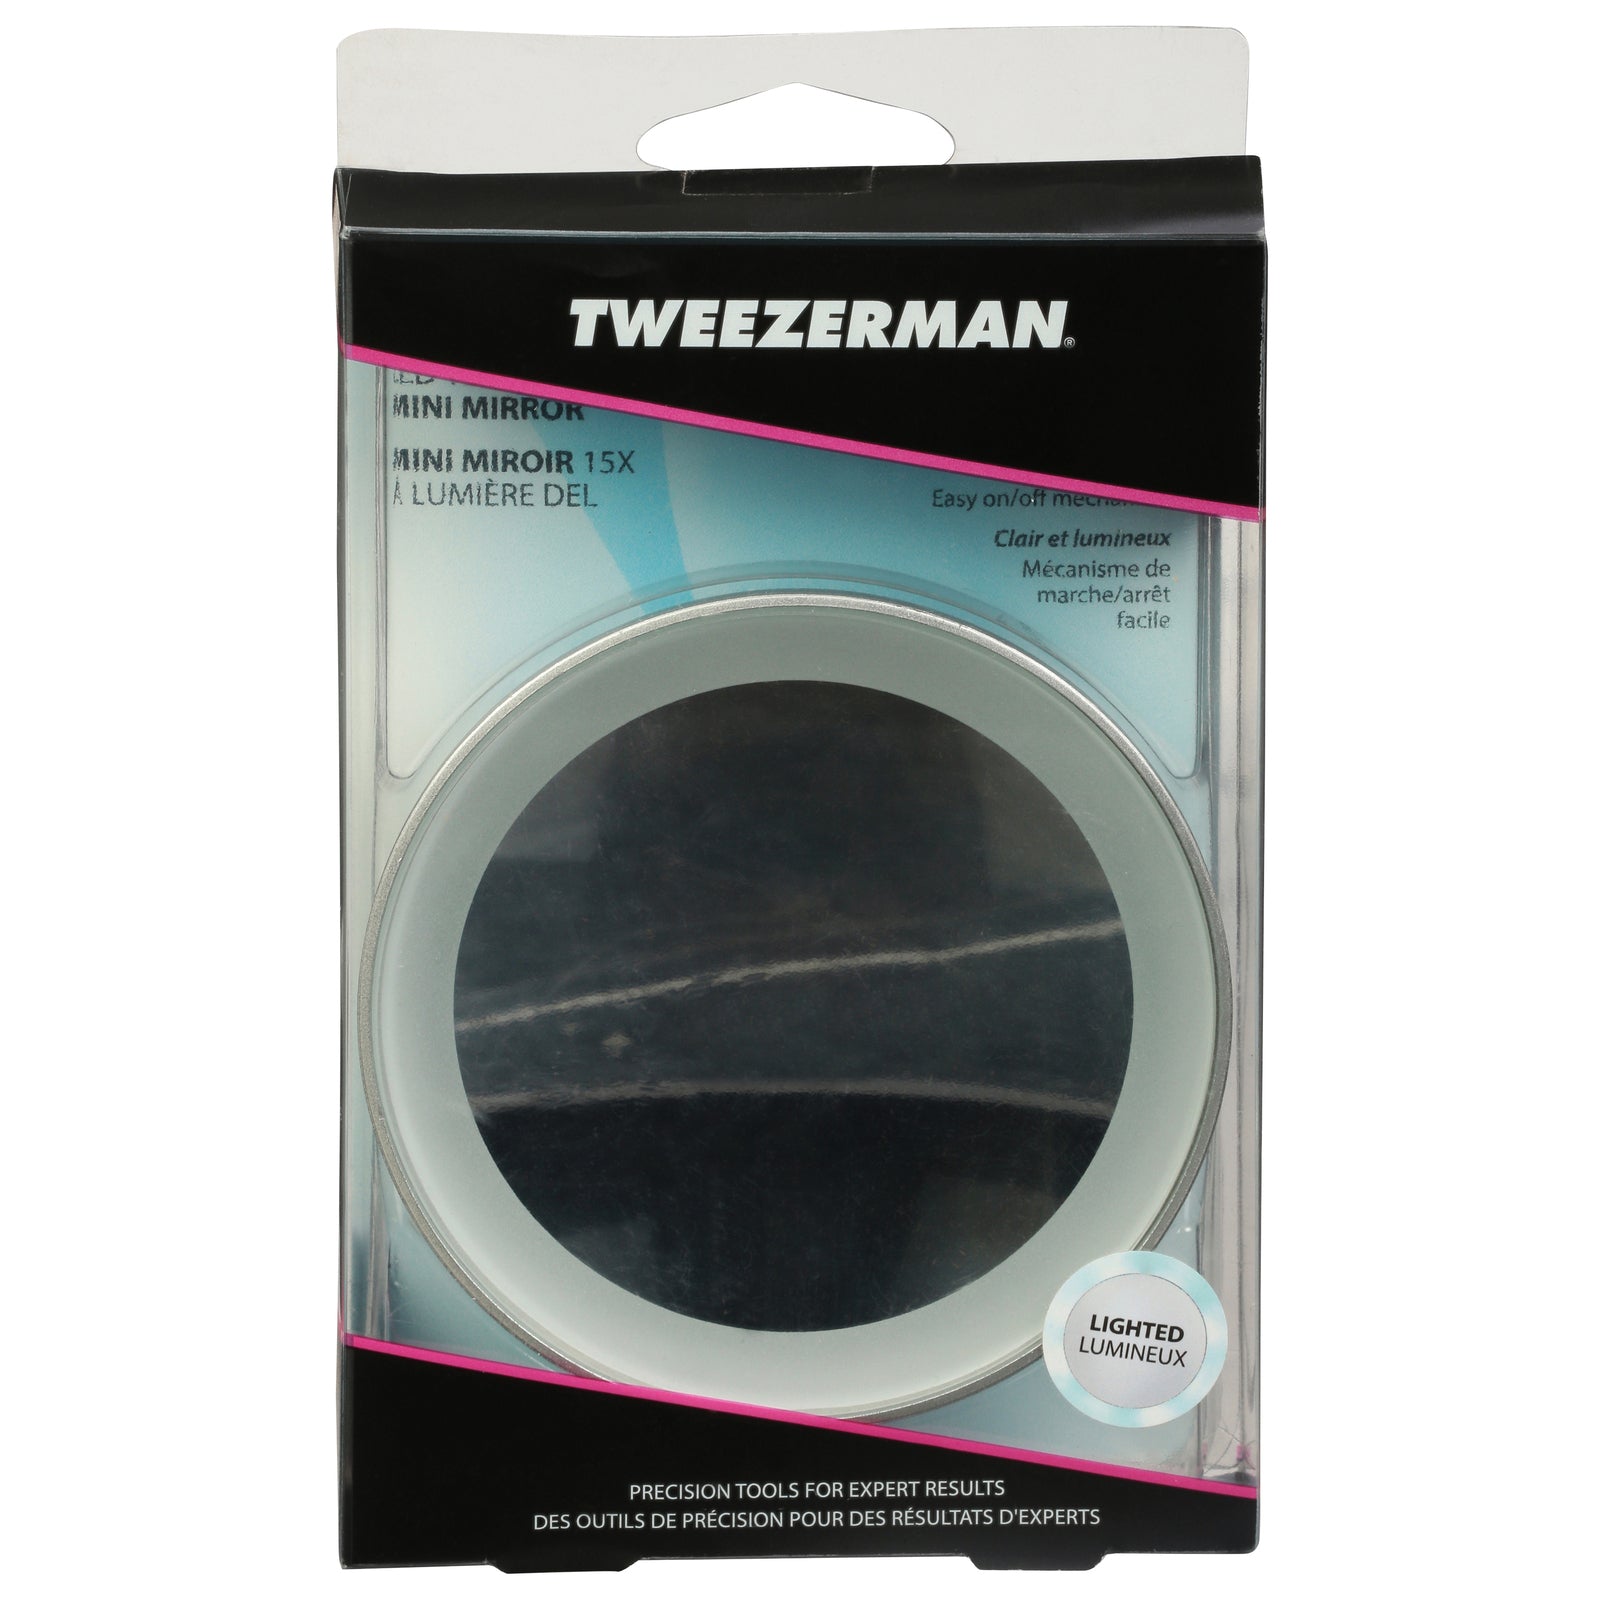 Tweezerman - Mirror Mini 15x Led Light - 1 Each-1 Ea